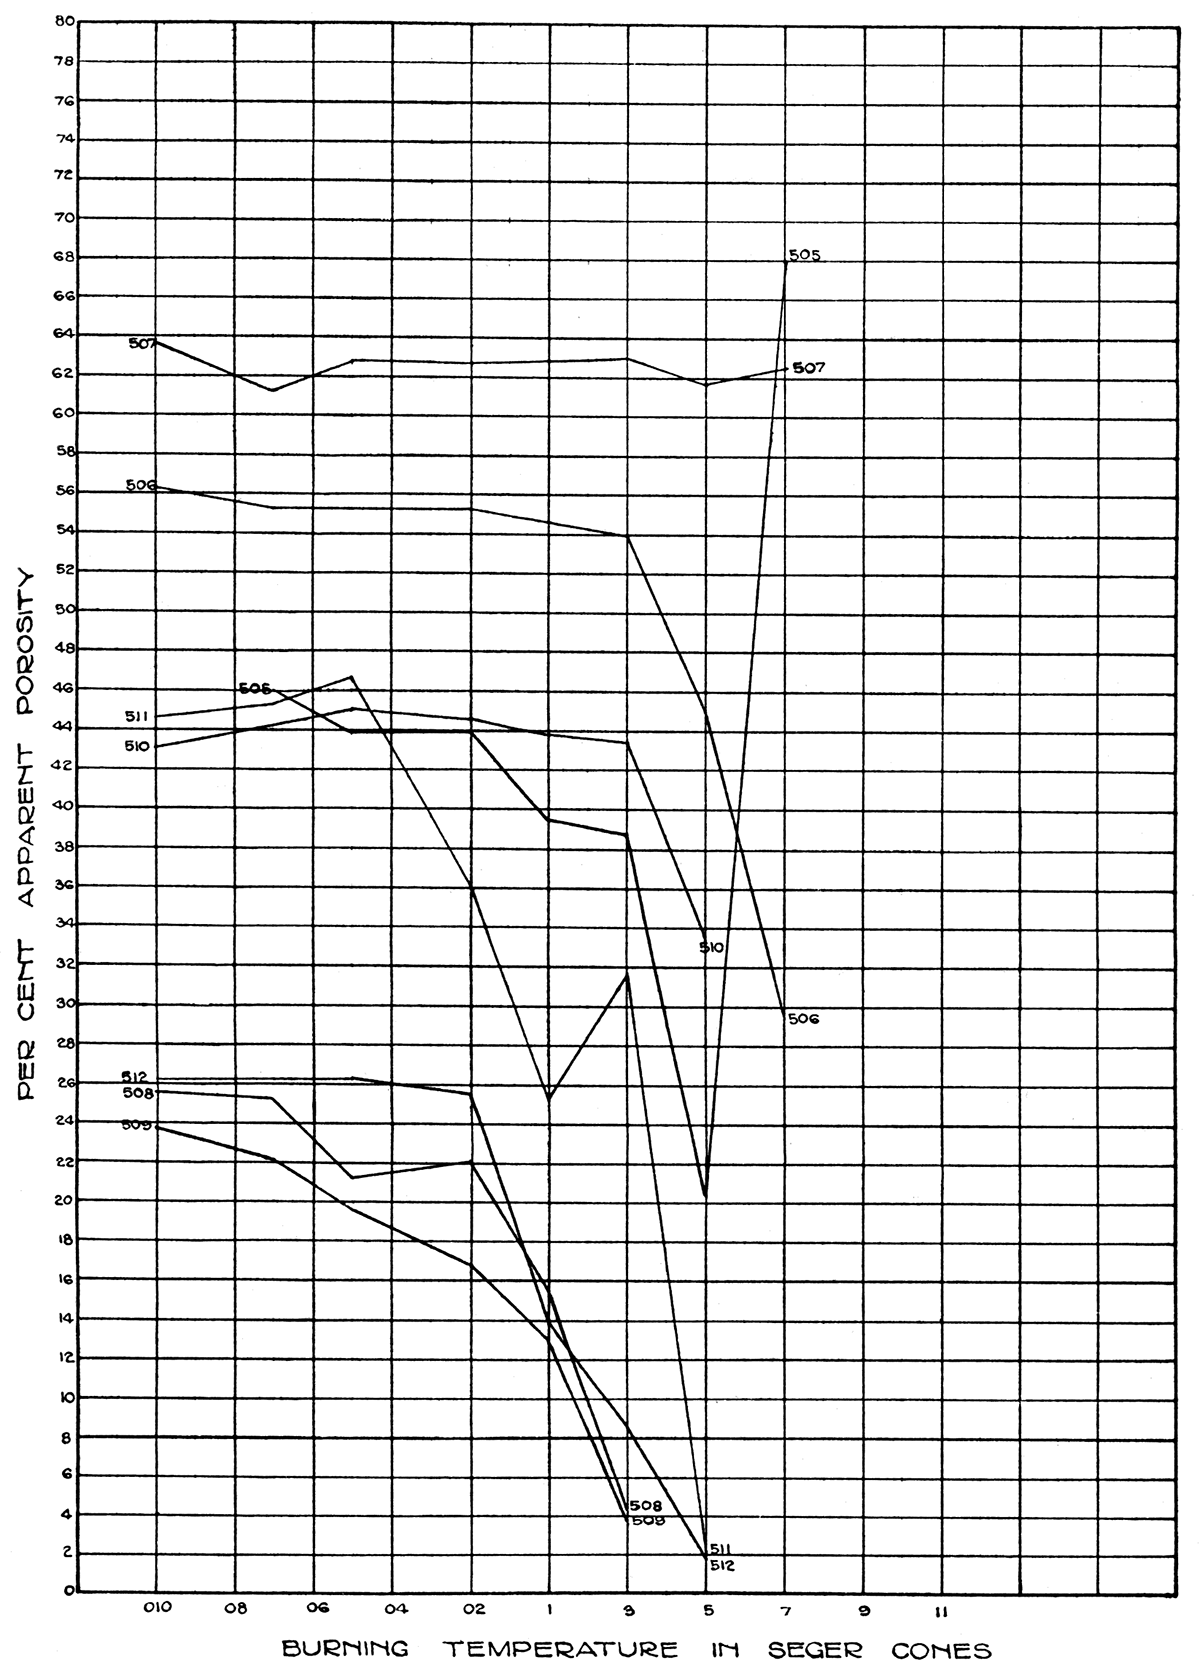 Porosity-temperature curves of Arkansas City clays.